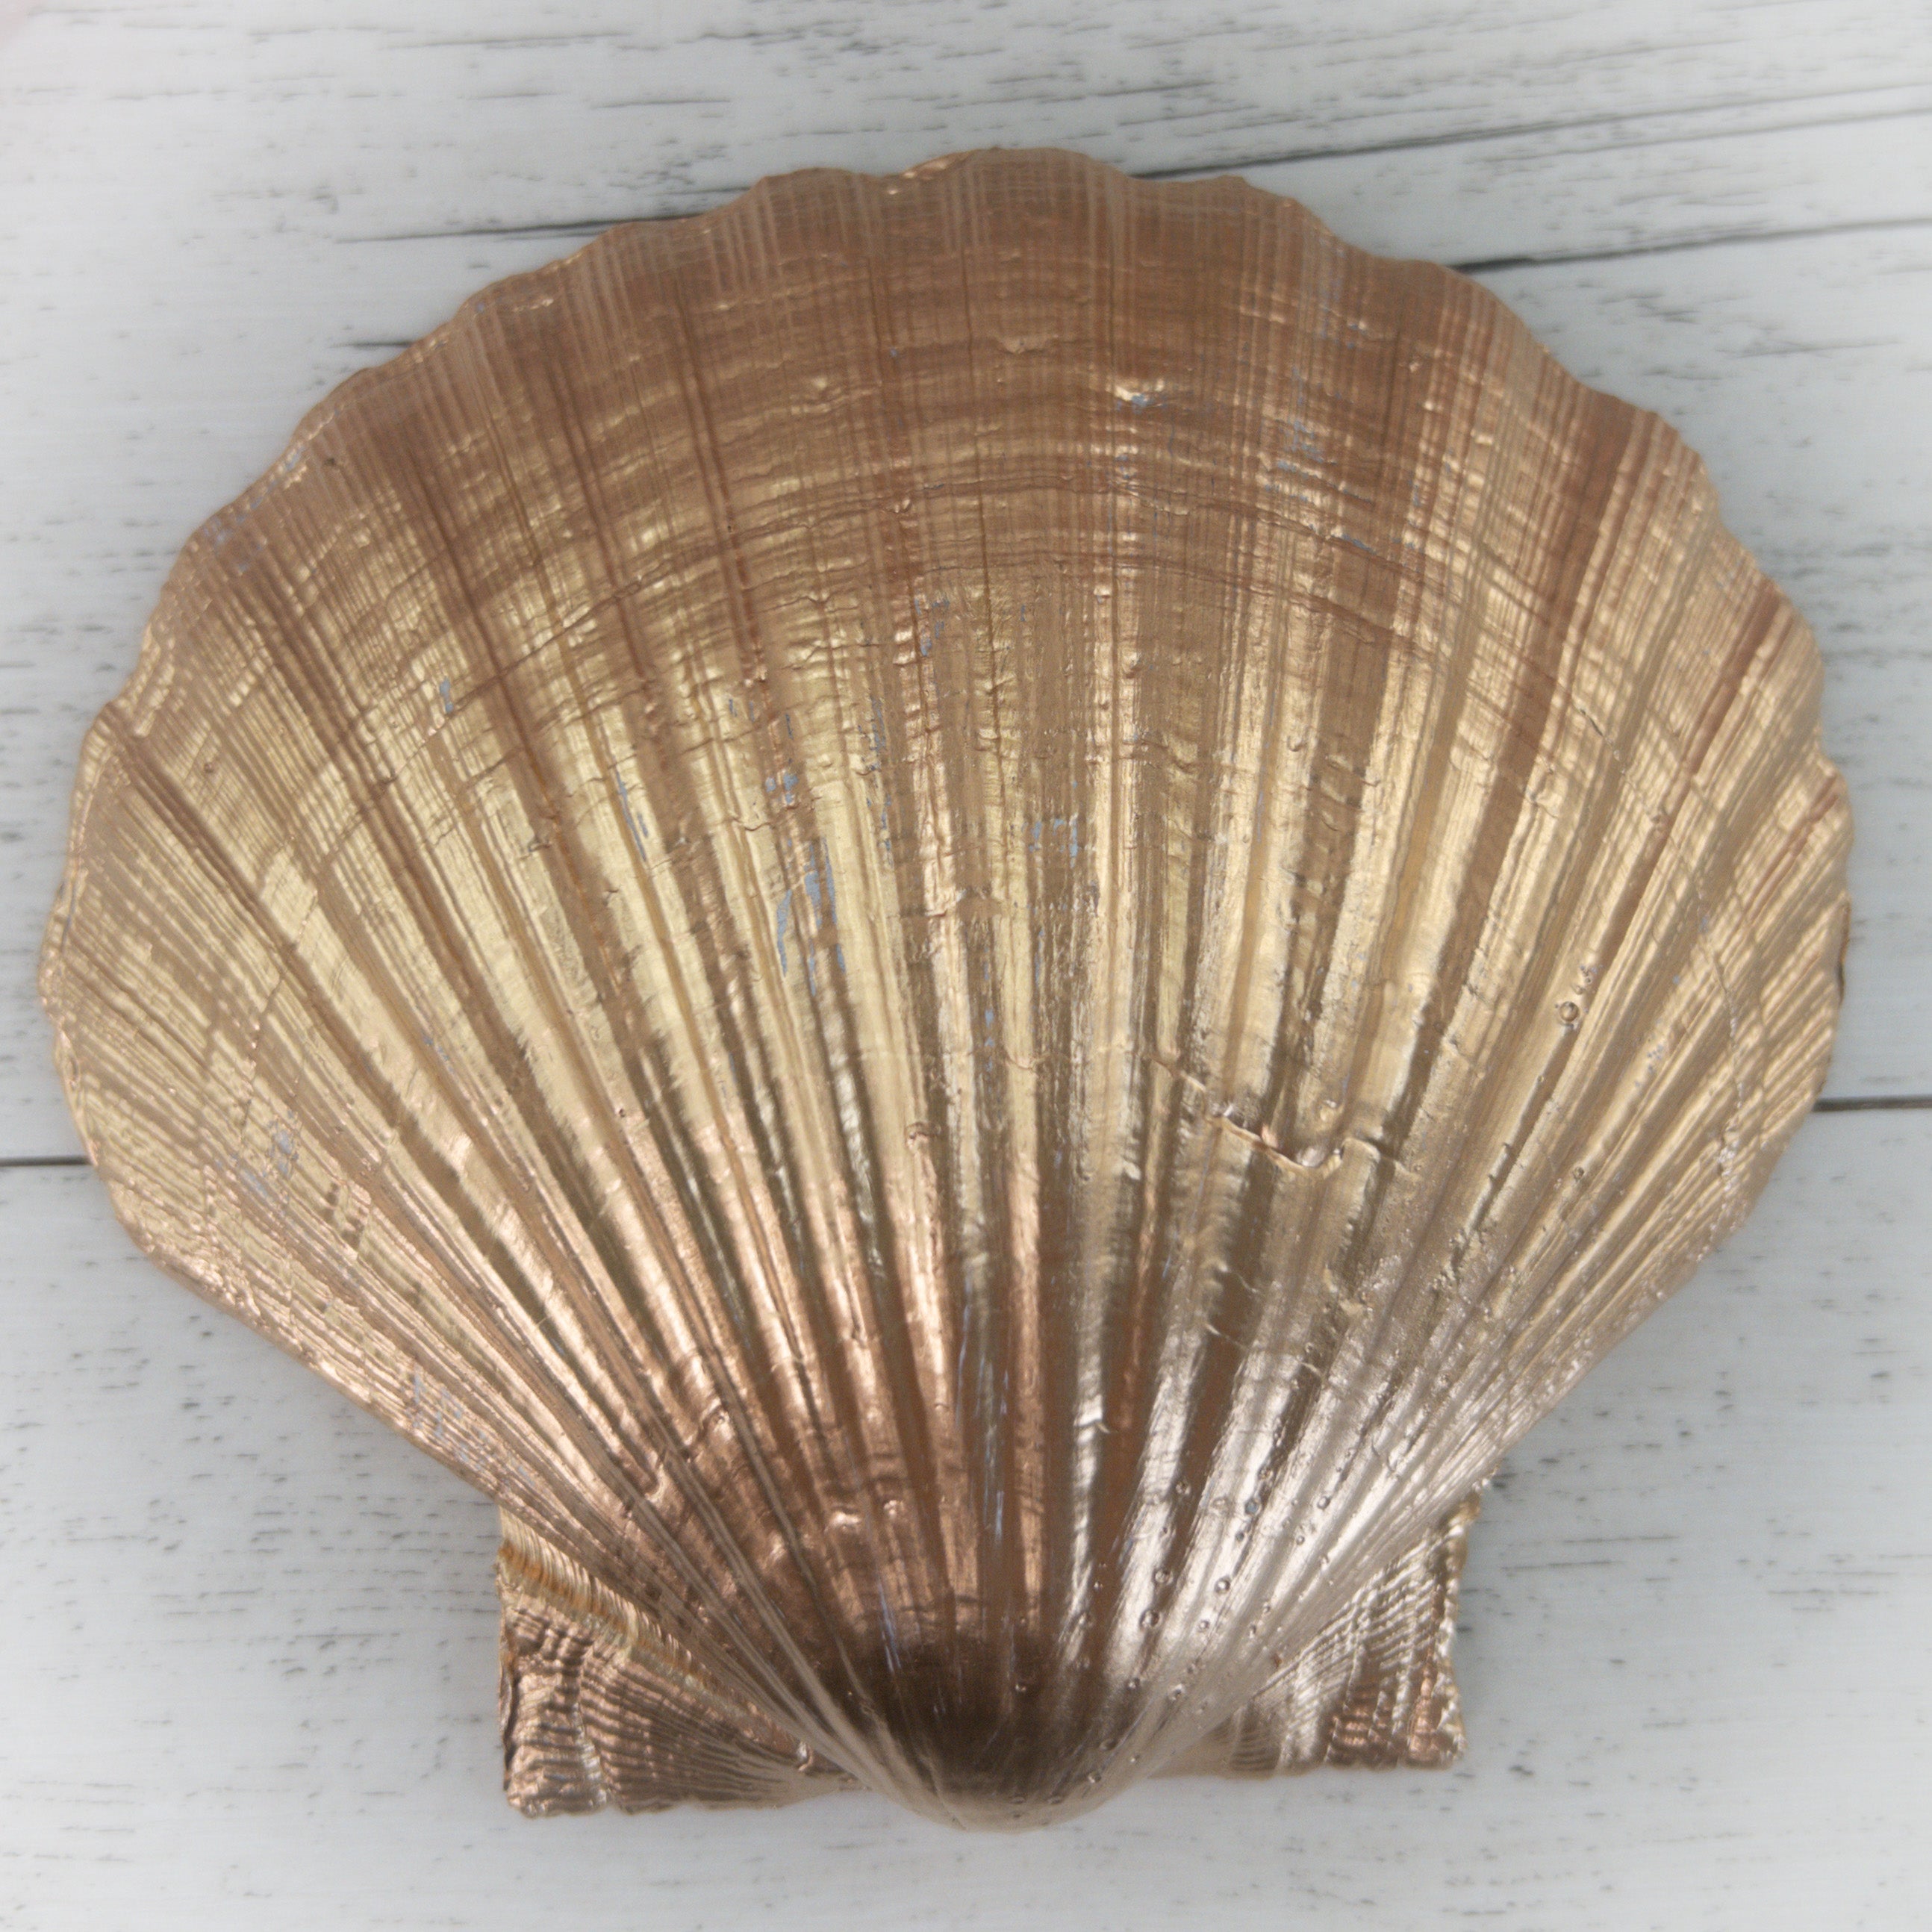 Ocean Treasure Shell Trinket Dish - Rose